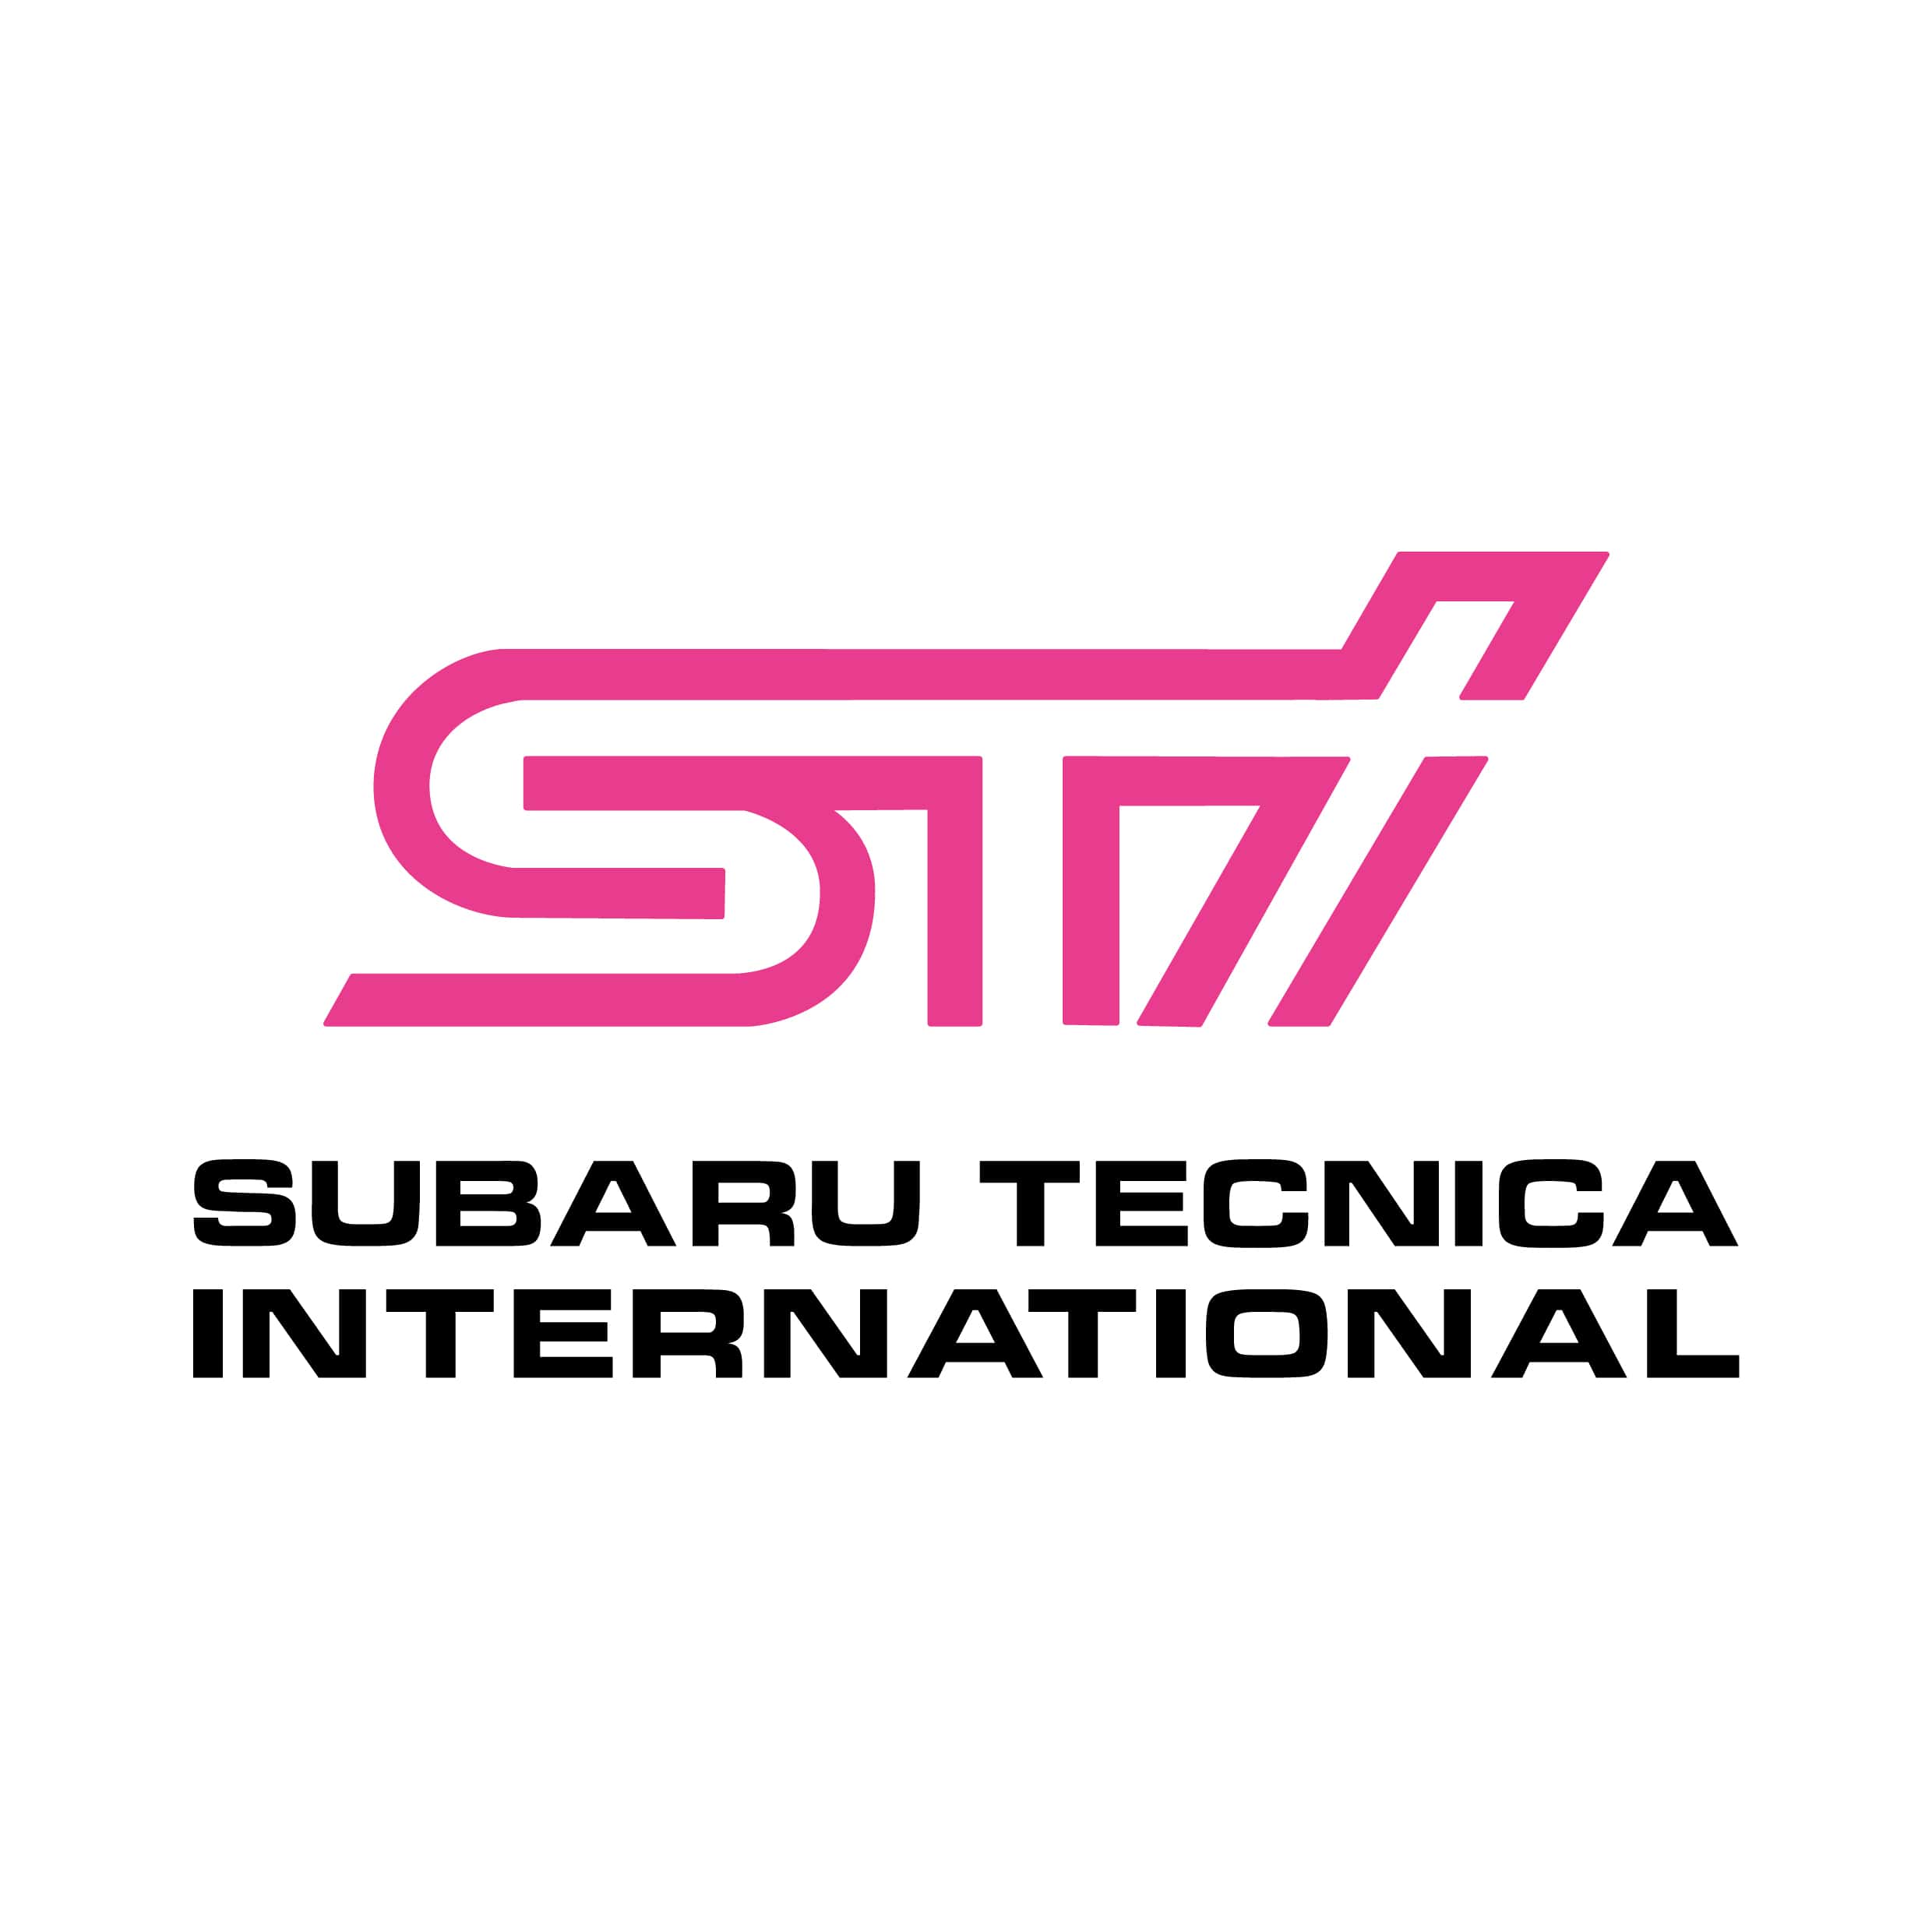 Subaru Technica International Logo - Stickers Subaru Tecnica International - Autocollant voiture